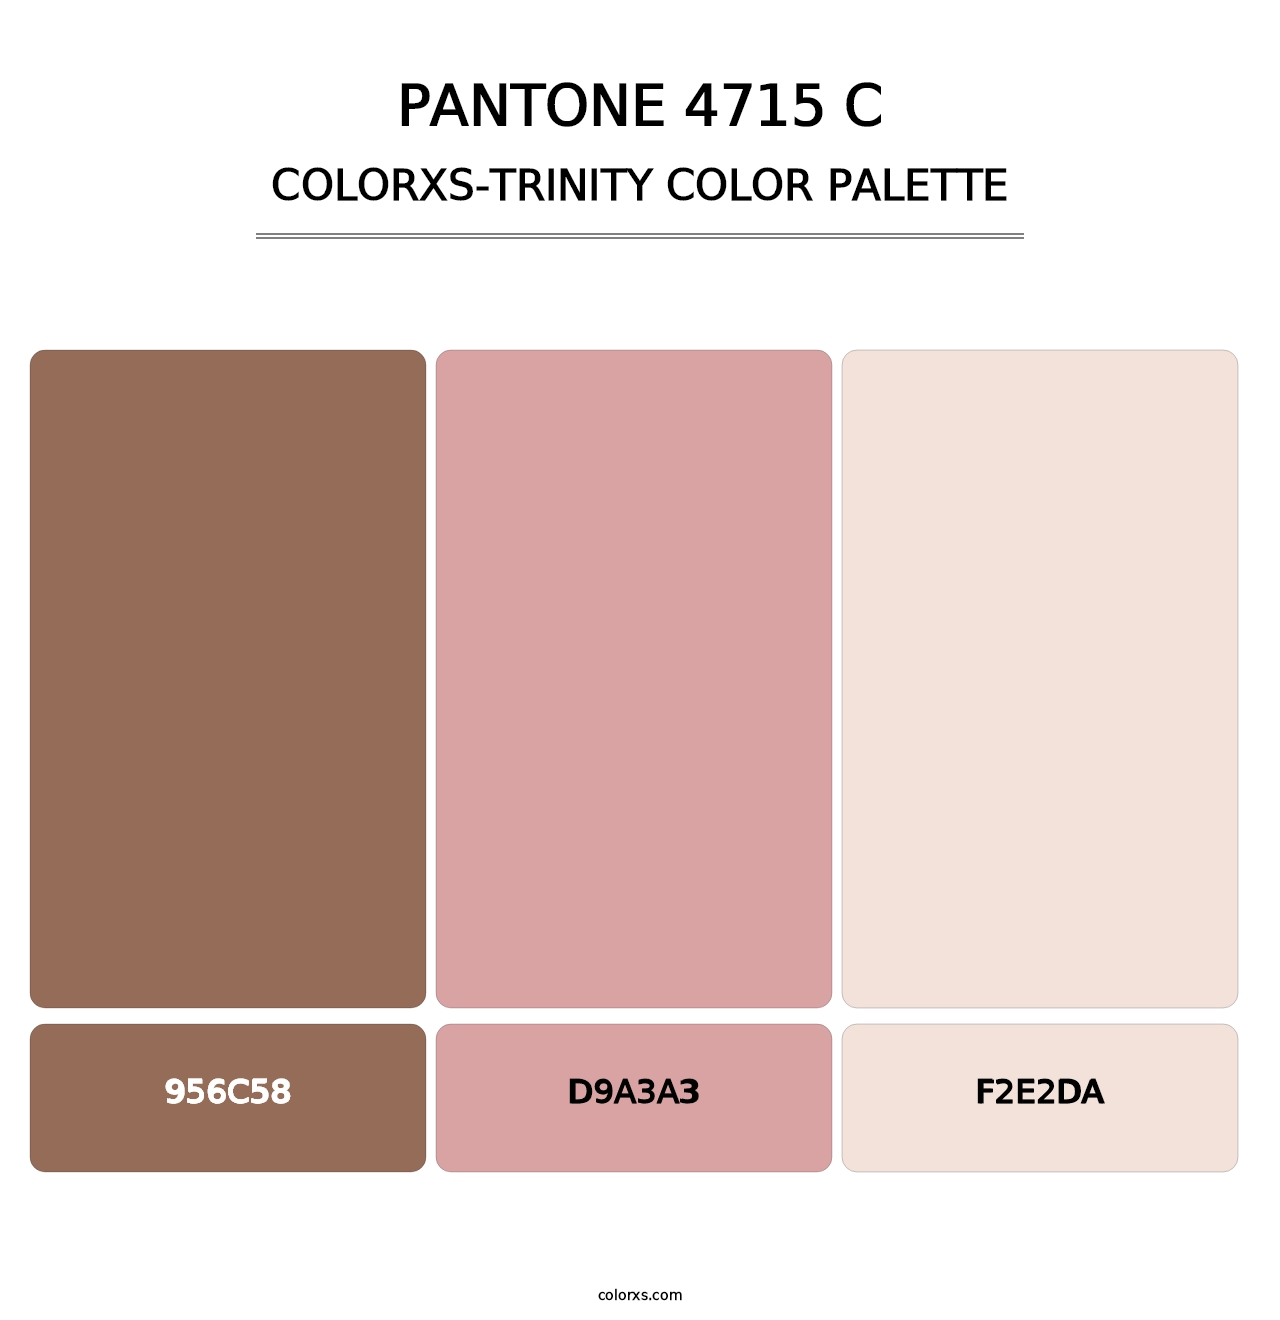 PANTONE 4715 C - Colorxs Trinity Palette